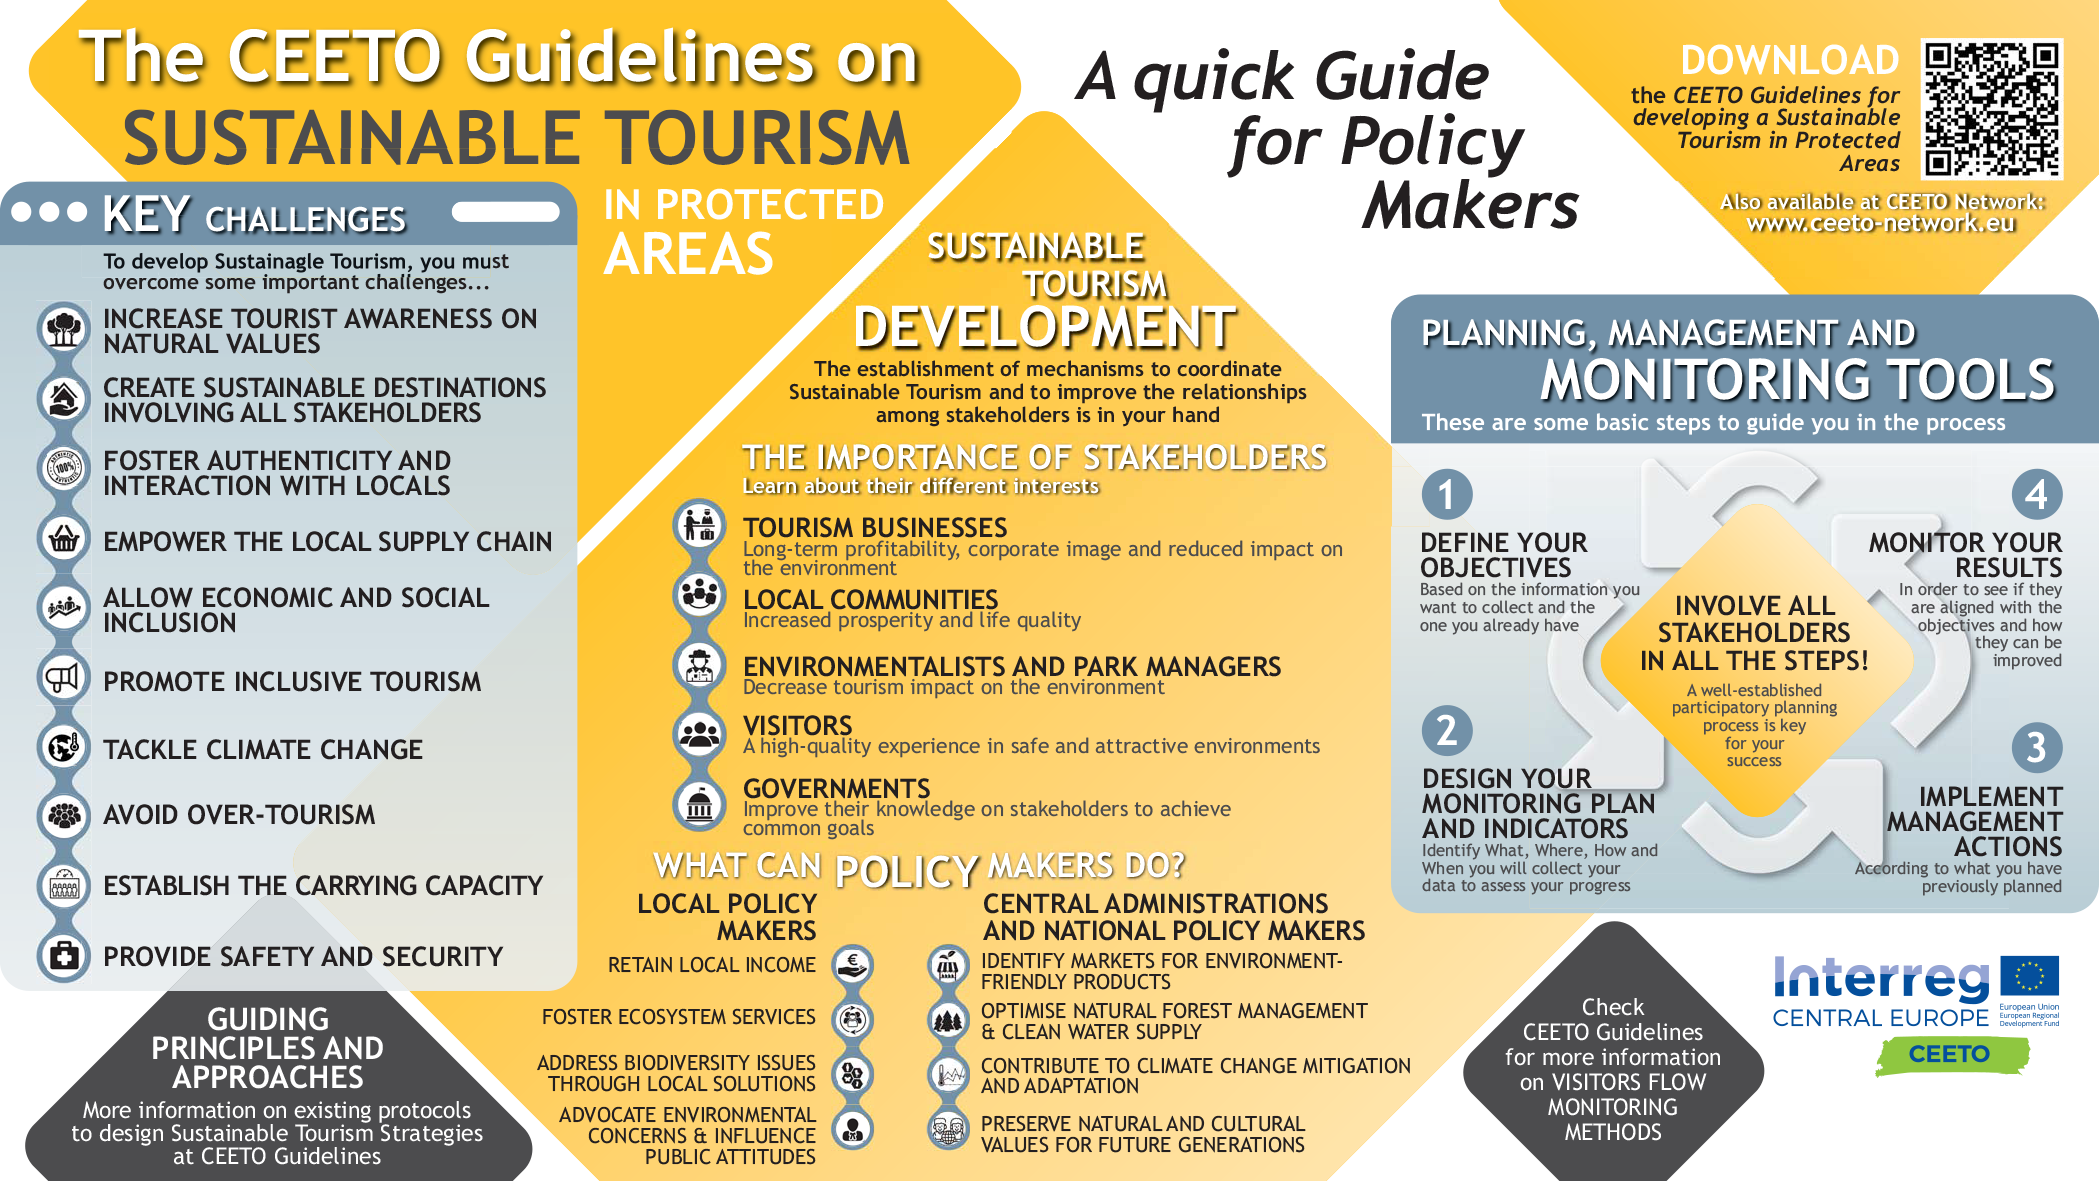 CEETO Guidelines Infographic 